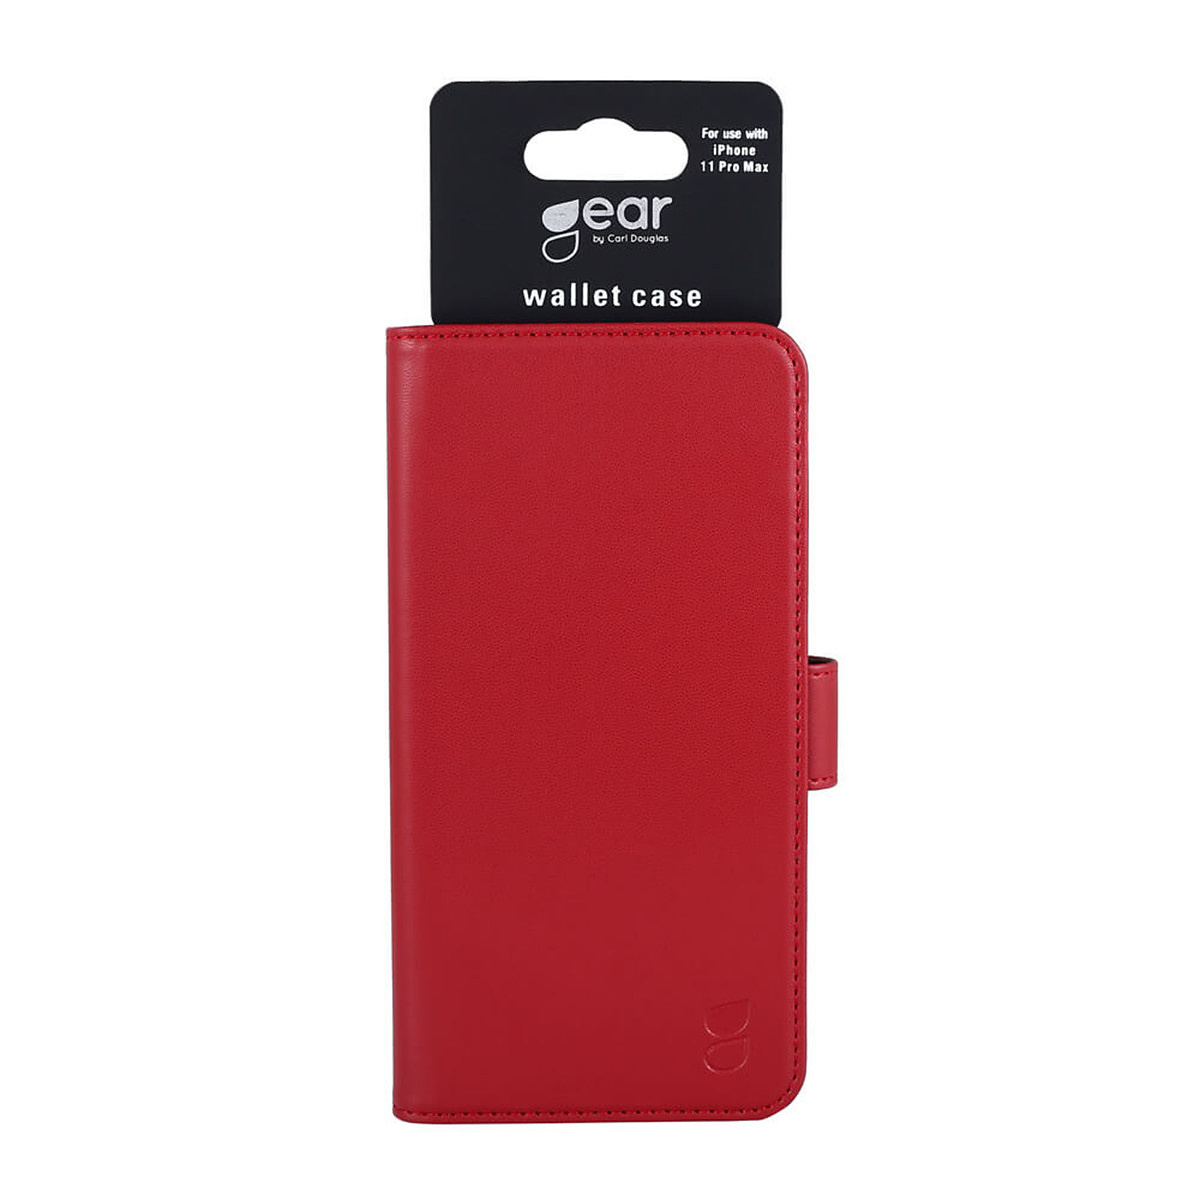 Gear Limited Edition plånboksfodral till iPhone 11 Pro Max, röd